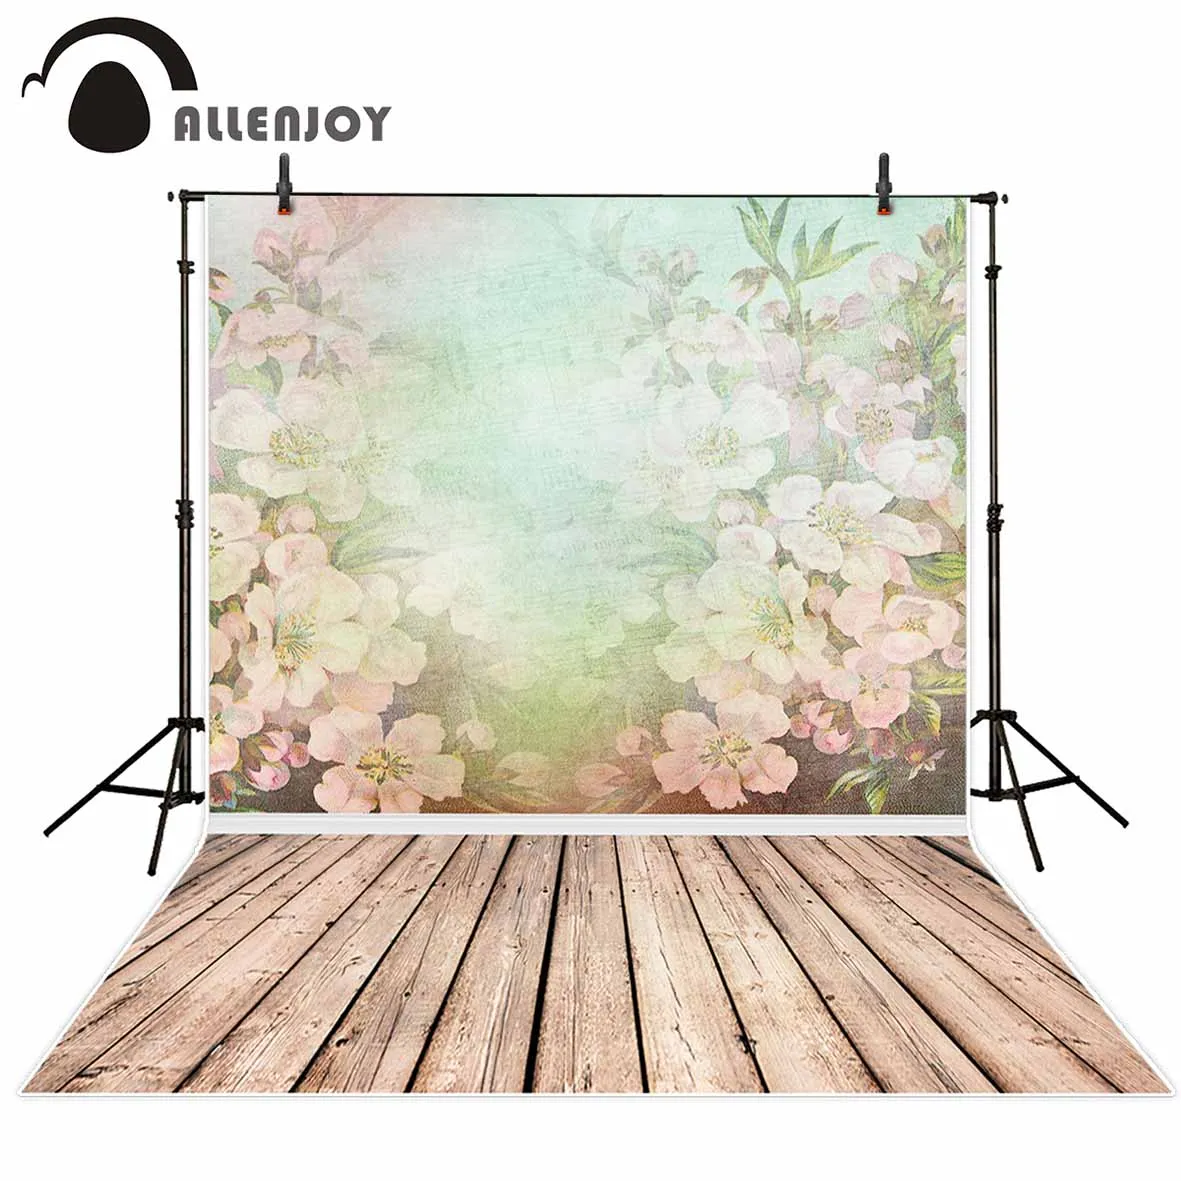 

Allenjoy vinyl photographic background Flower wallpaper dreamy girl portrait new backdrop photocall photo printer customize